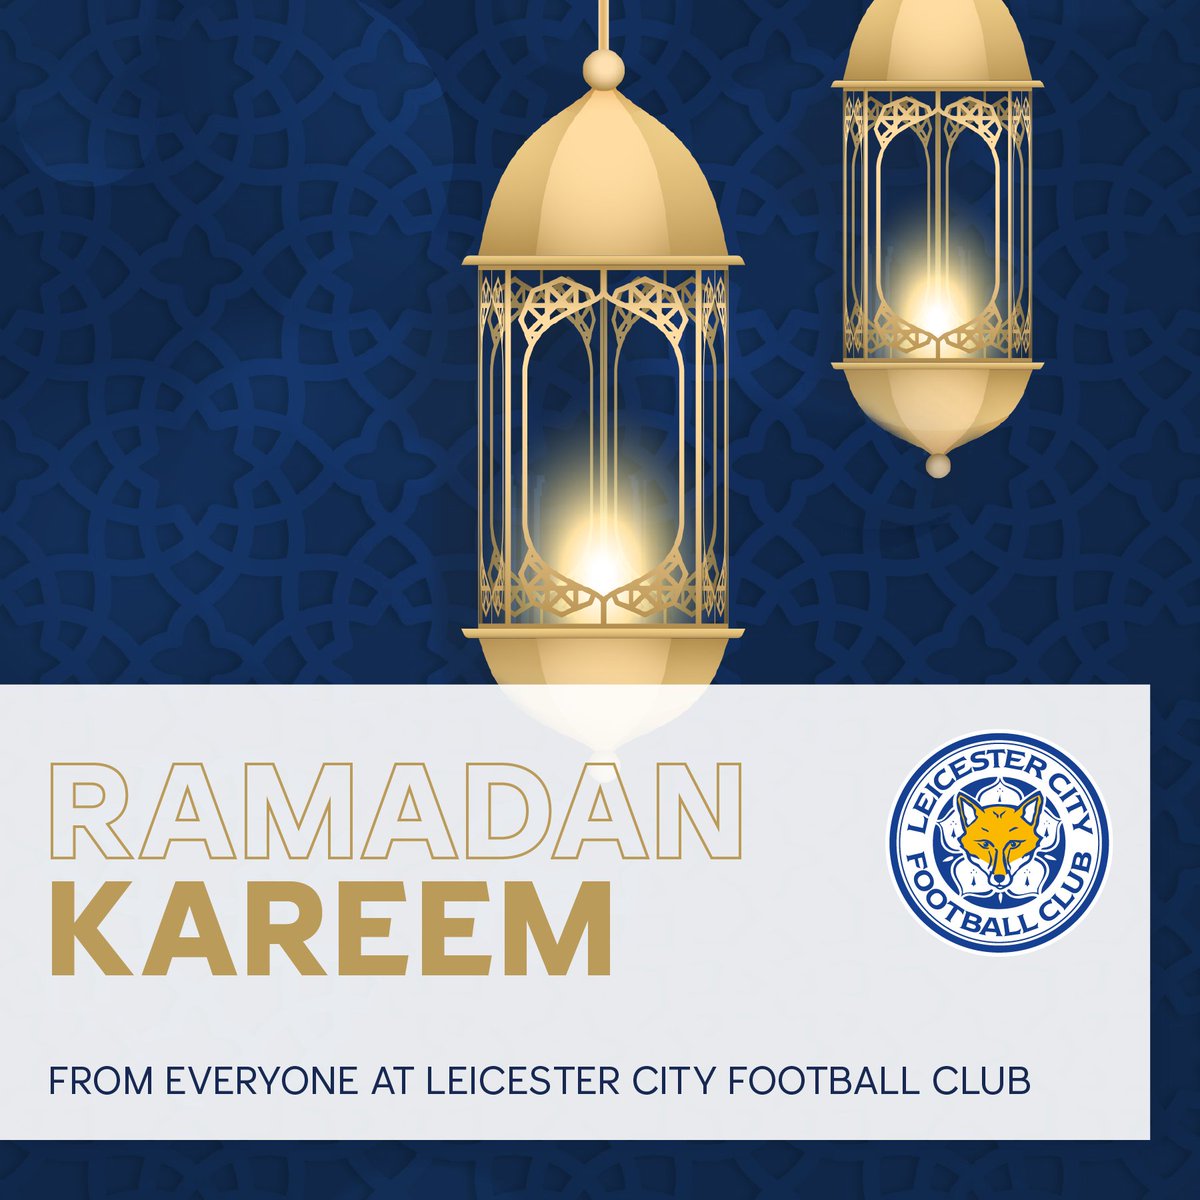 Wishing a happy start to Ramadan to everyone celebrating.